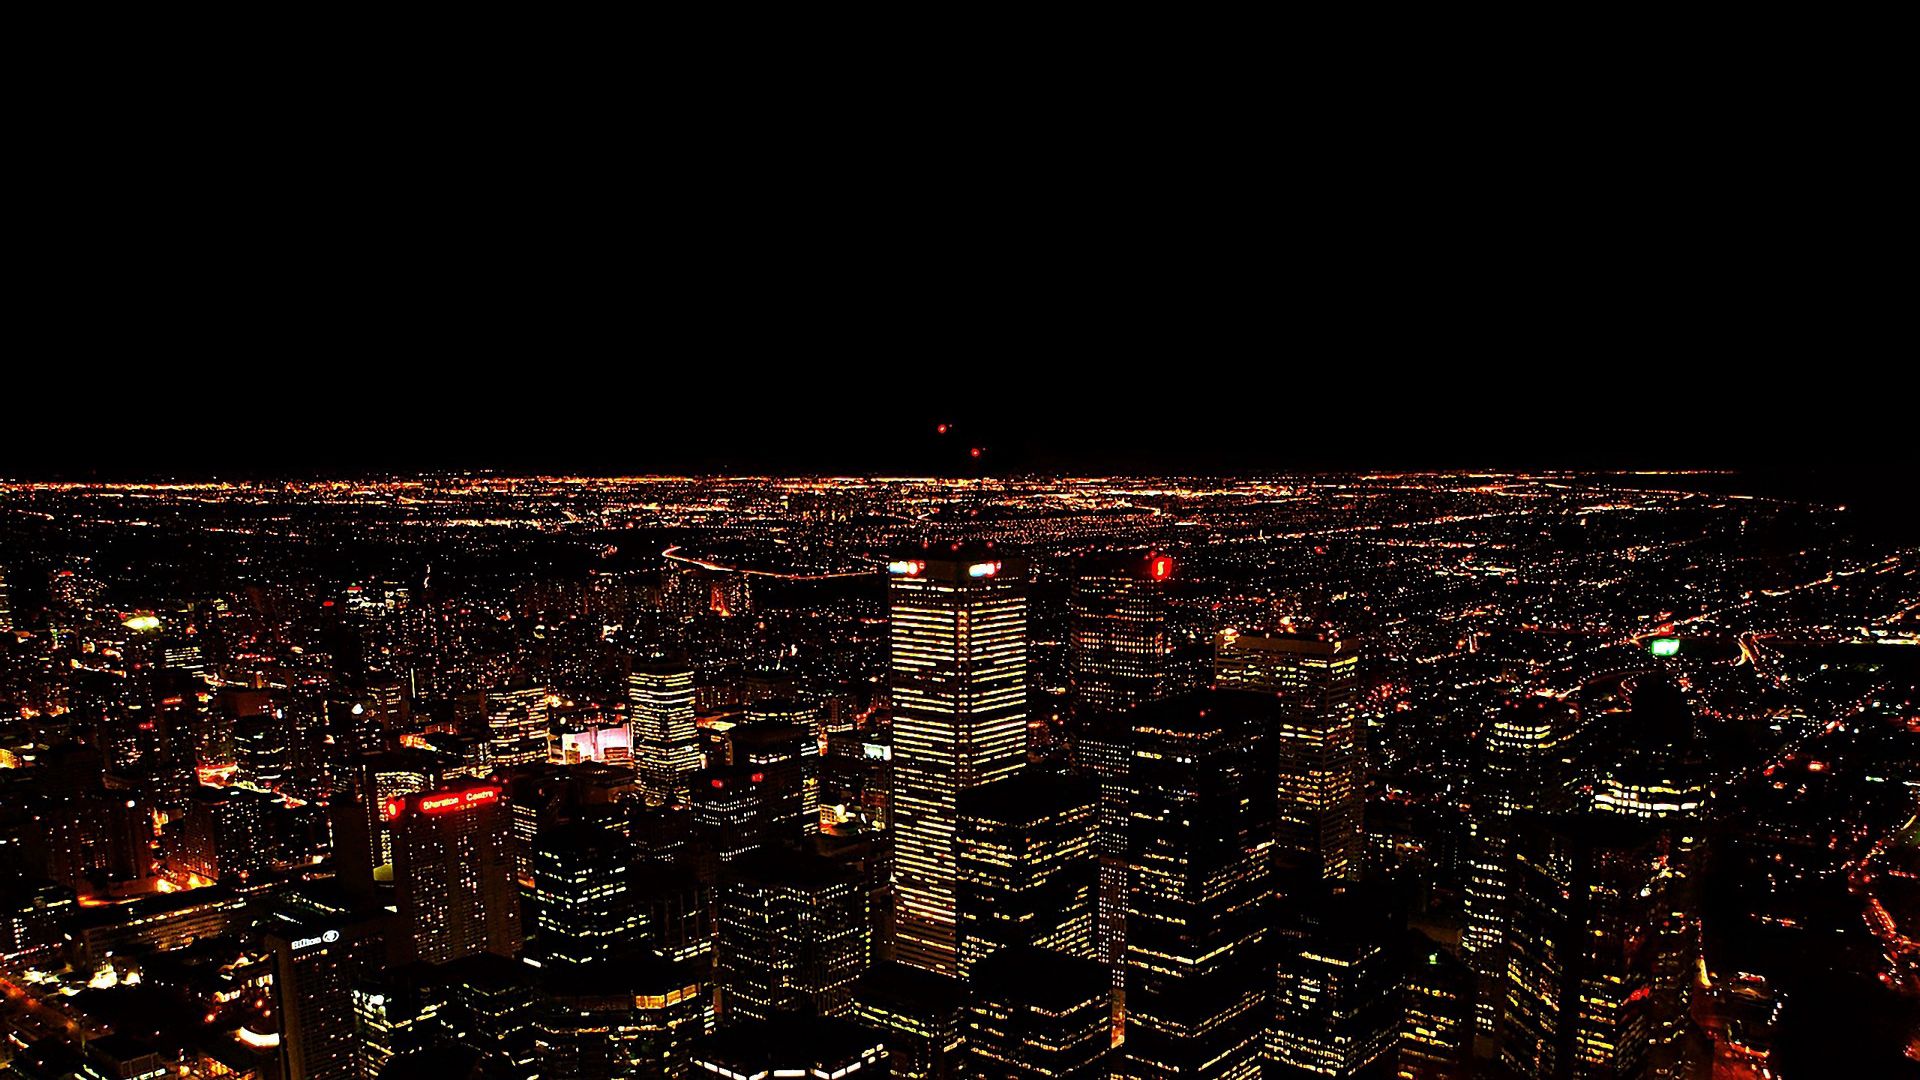 Download wallpaper 1920x1080 city, night, light, top view full hd, hdtv,  fhd, 1080p hd background